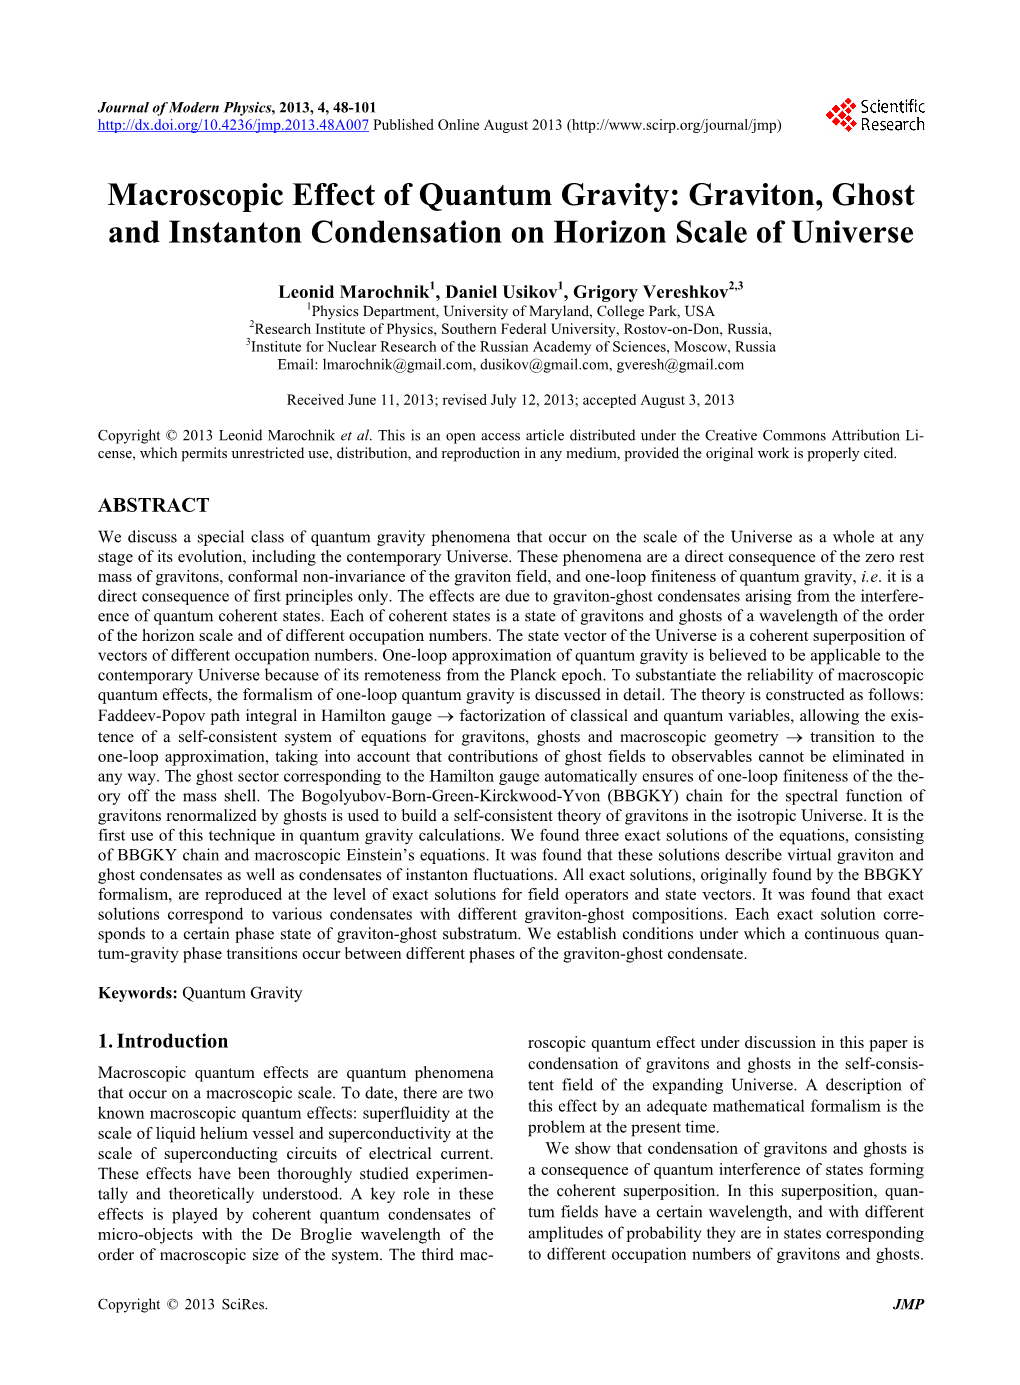 Macroscopic Effect of Quantum Gravity: Graviton, Ghost and Instanton Condensation on Horizon Scale of Universe